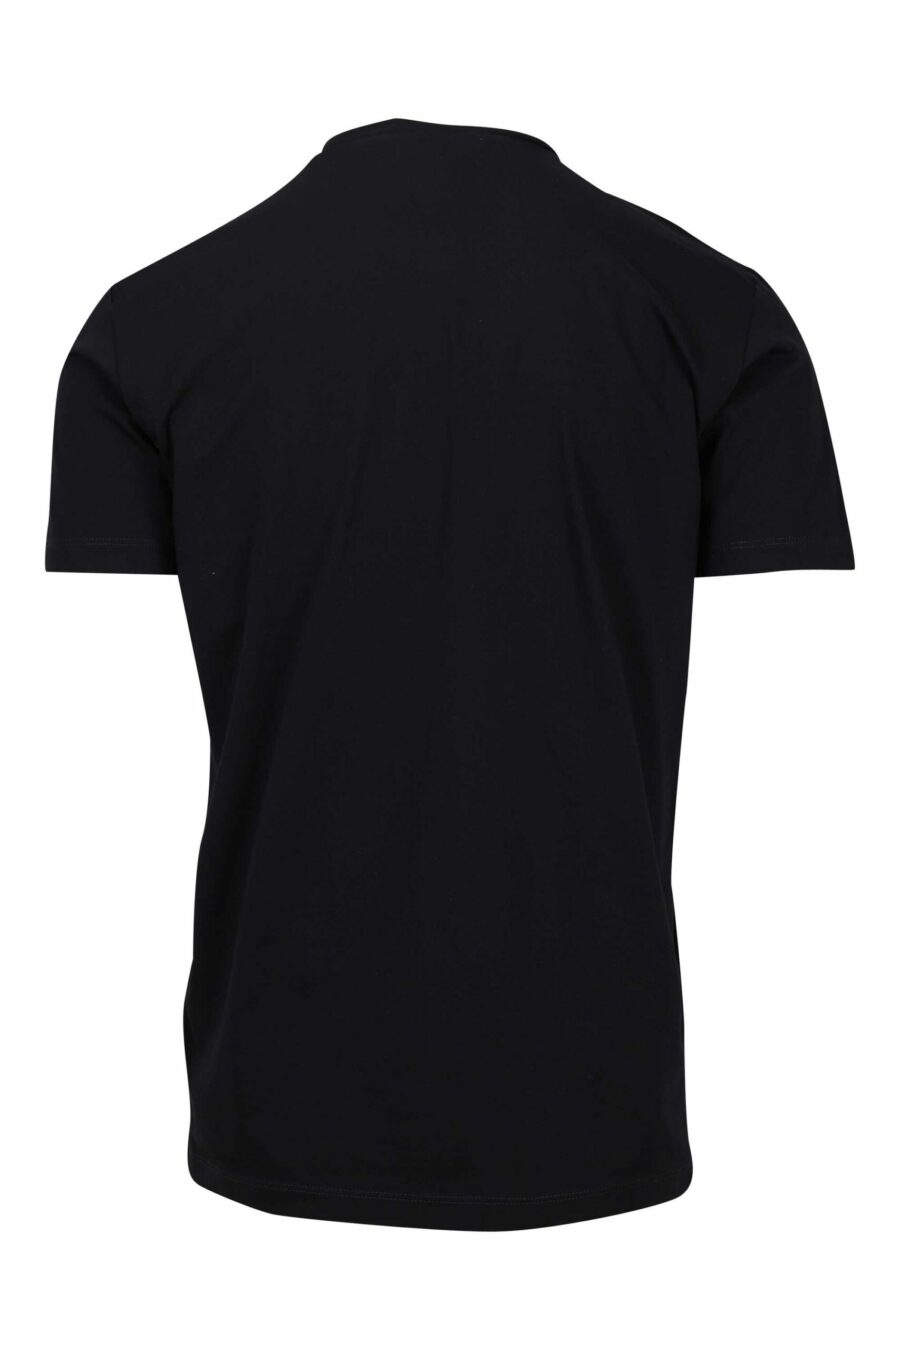 Camiseta negra con maxilogo "icon" cuadrado - 8052134981047 1 scaled